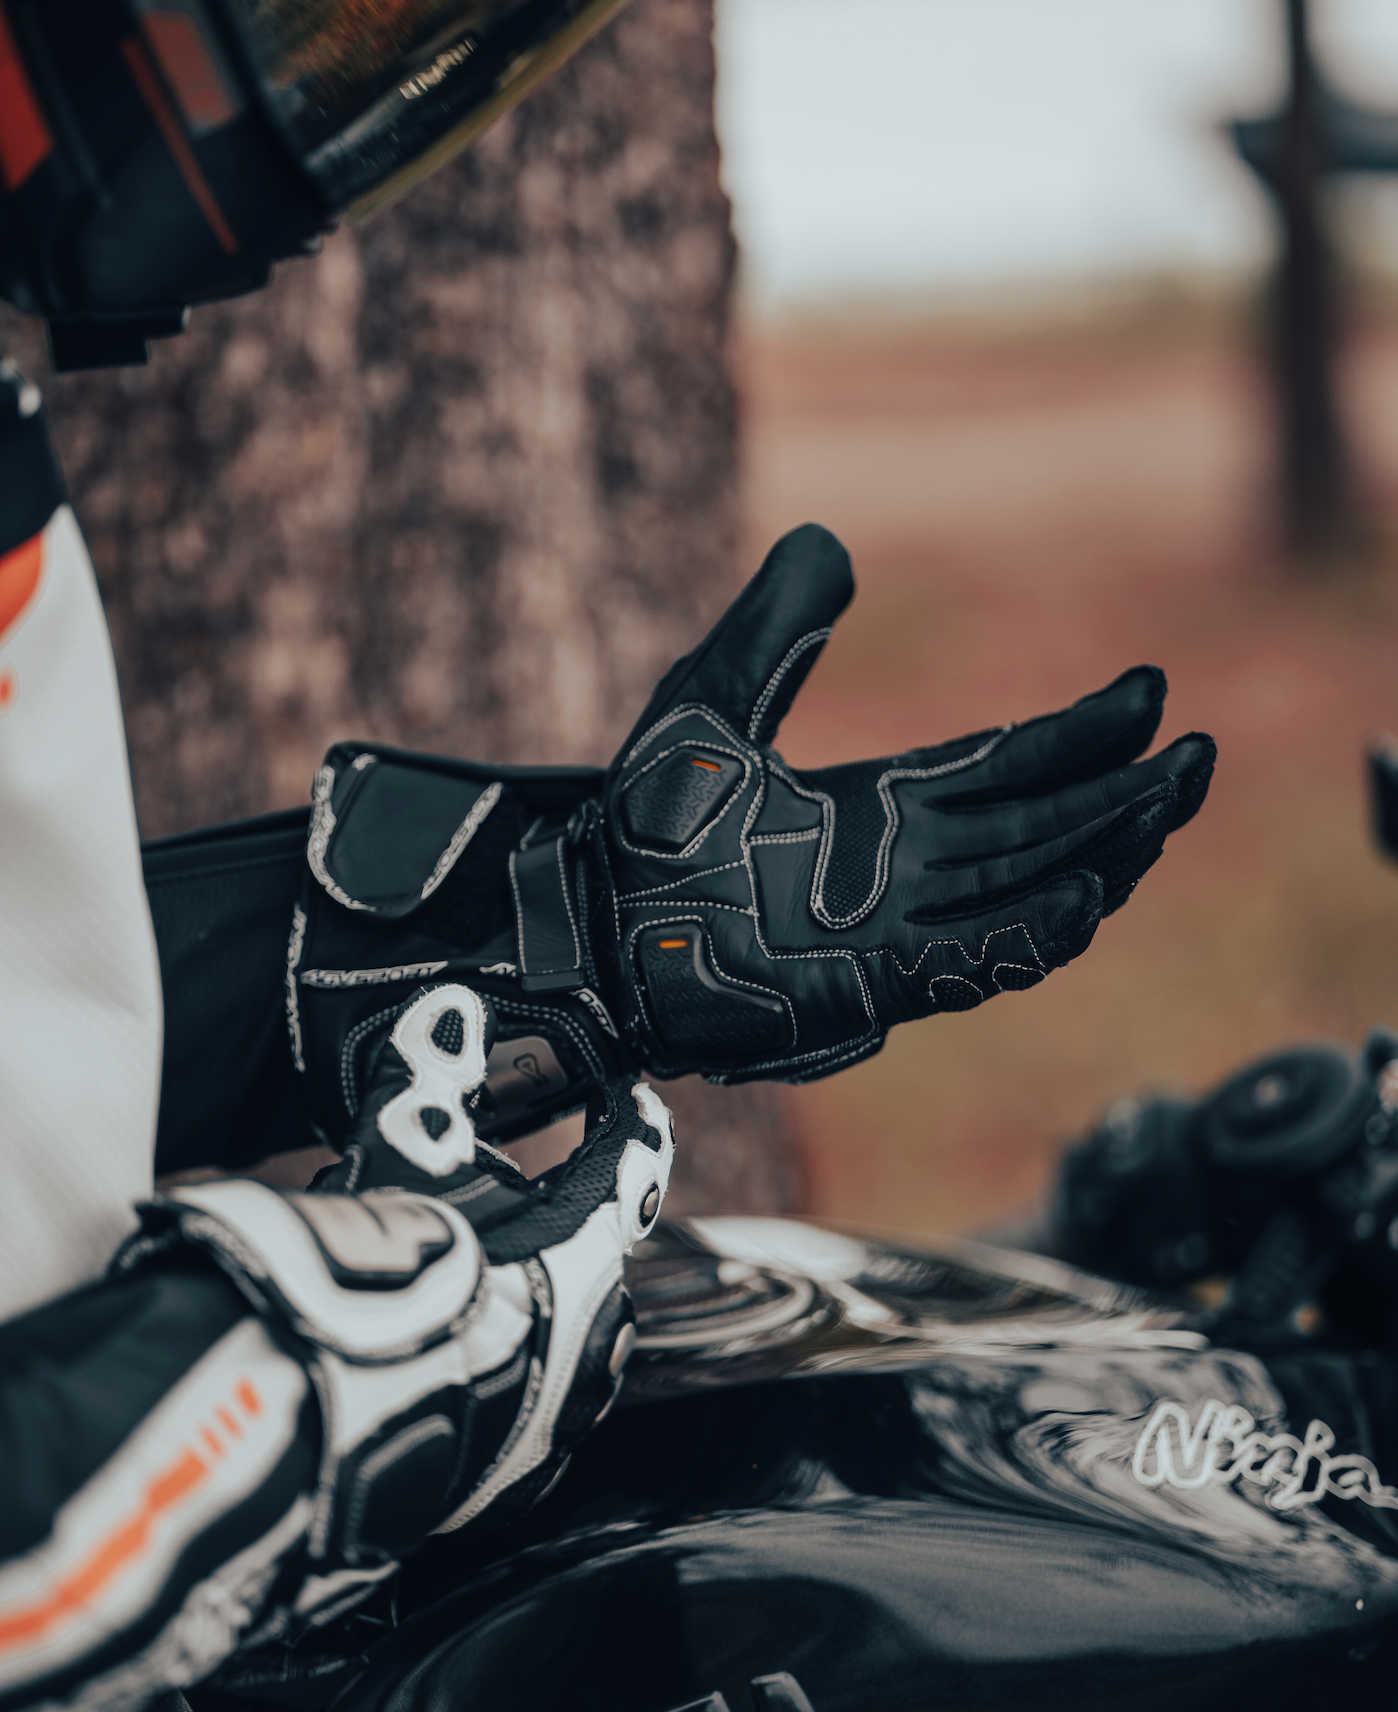 Echelon Plus Racing Glove with Knox Sliders